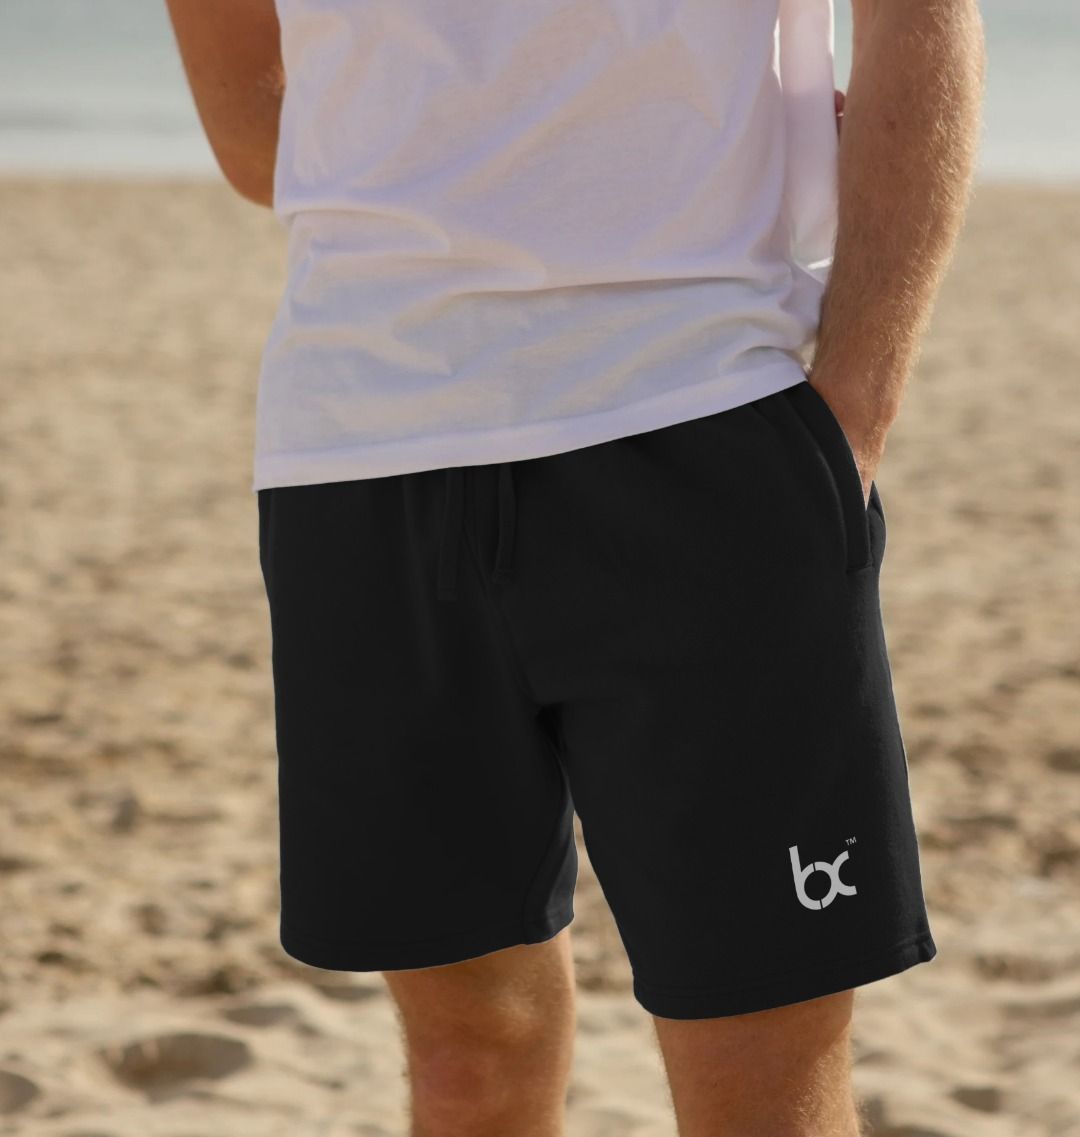 BX Shorts - with white logo